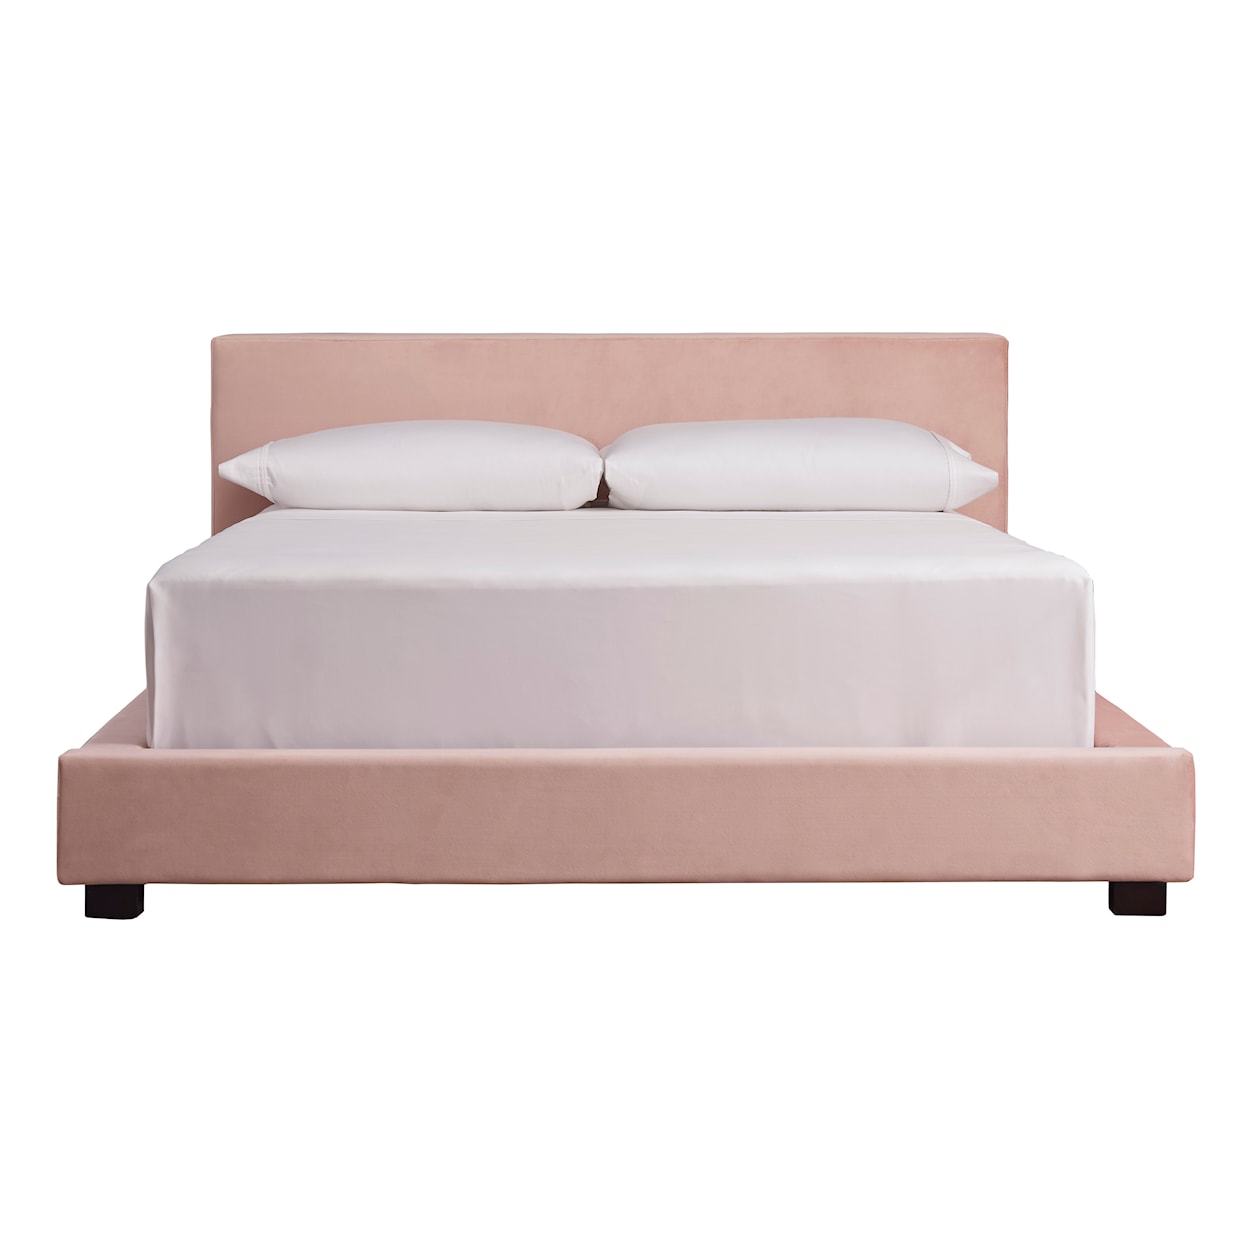 Ashley Chesani Twin Upholstered Bed